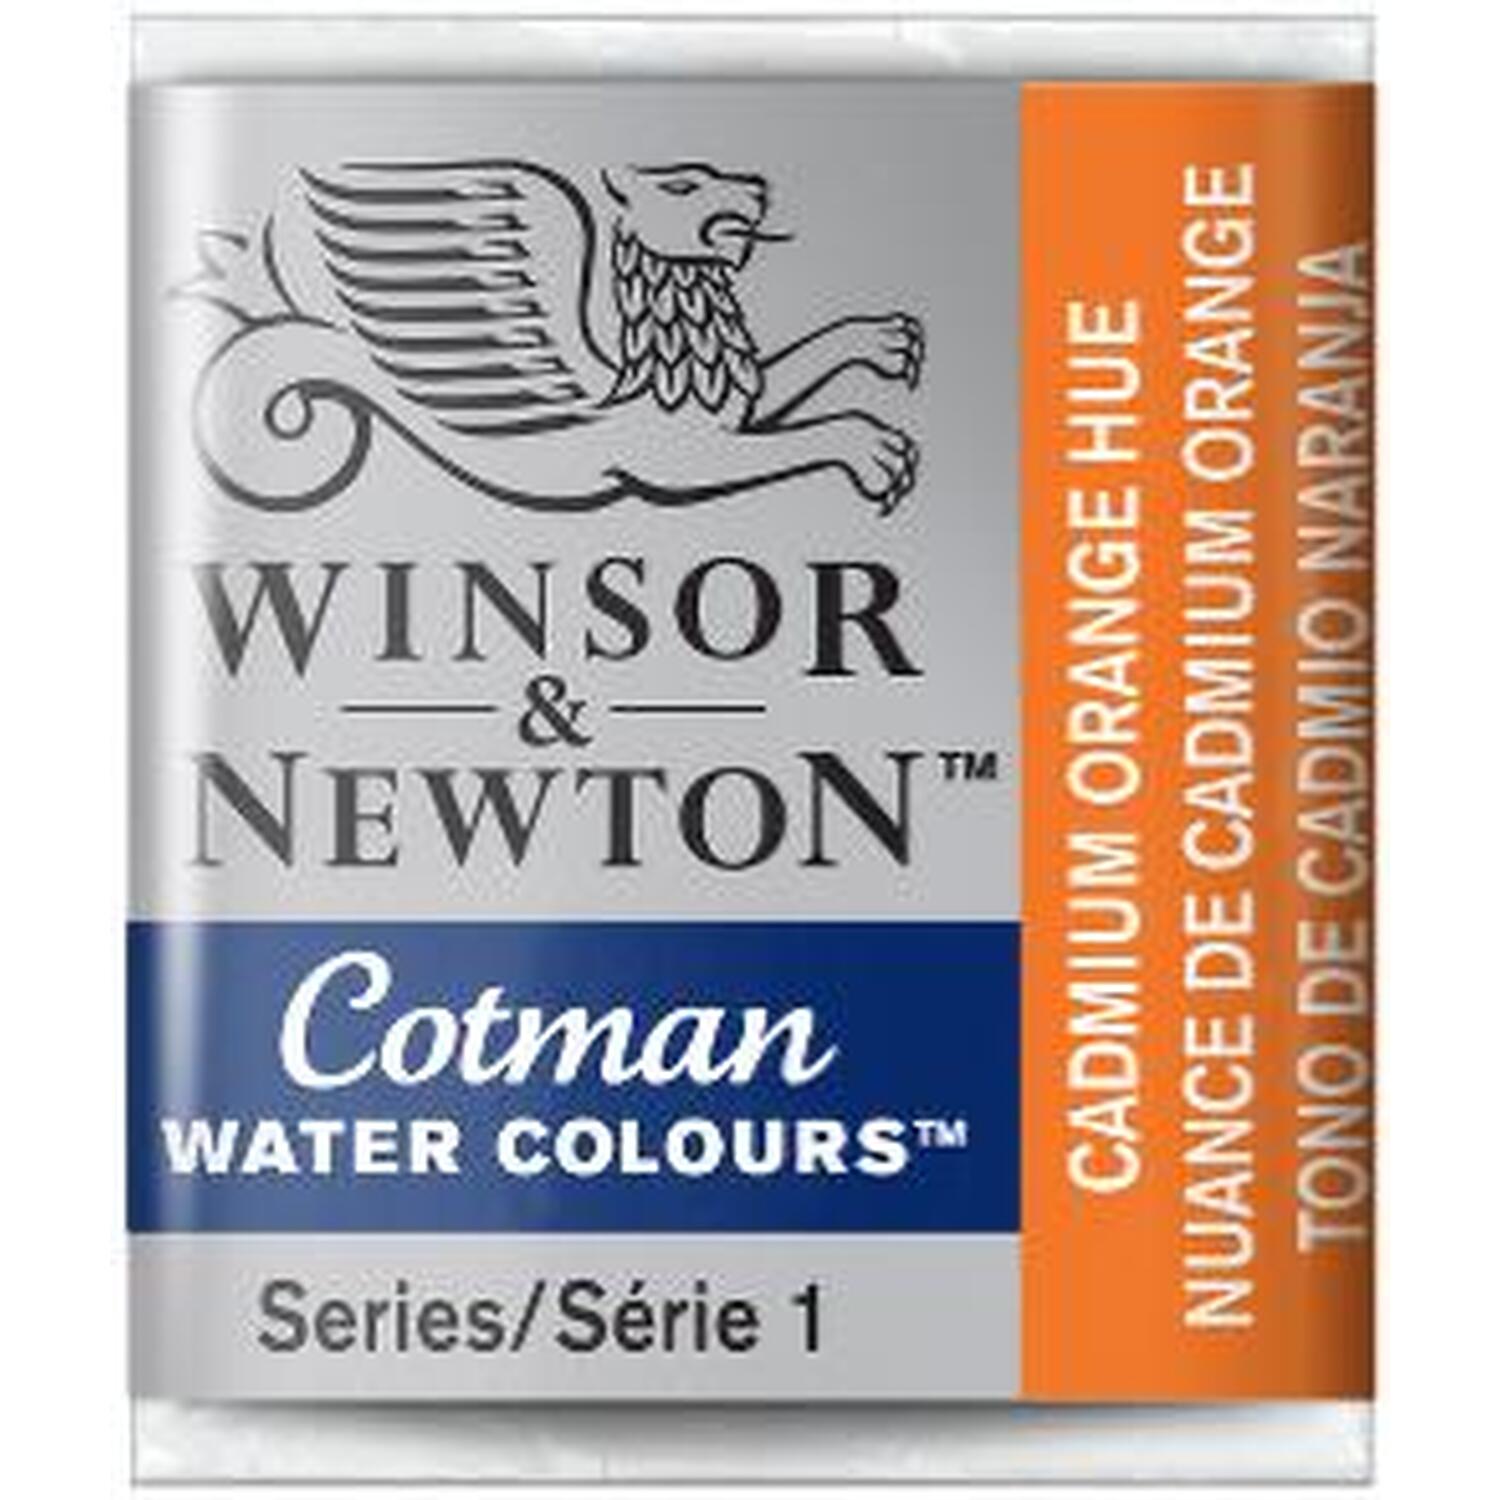 Winsor and Newton Cotman Watercolour Half Pan Paint - Cadmium Orange Hue Image